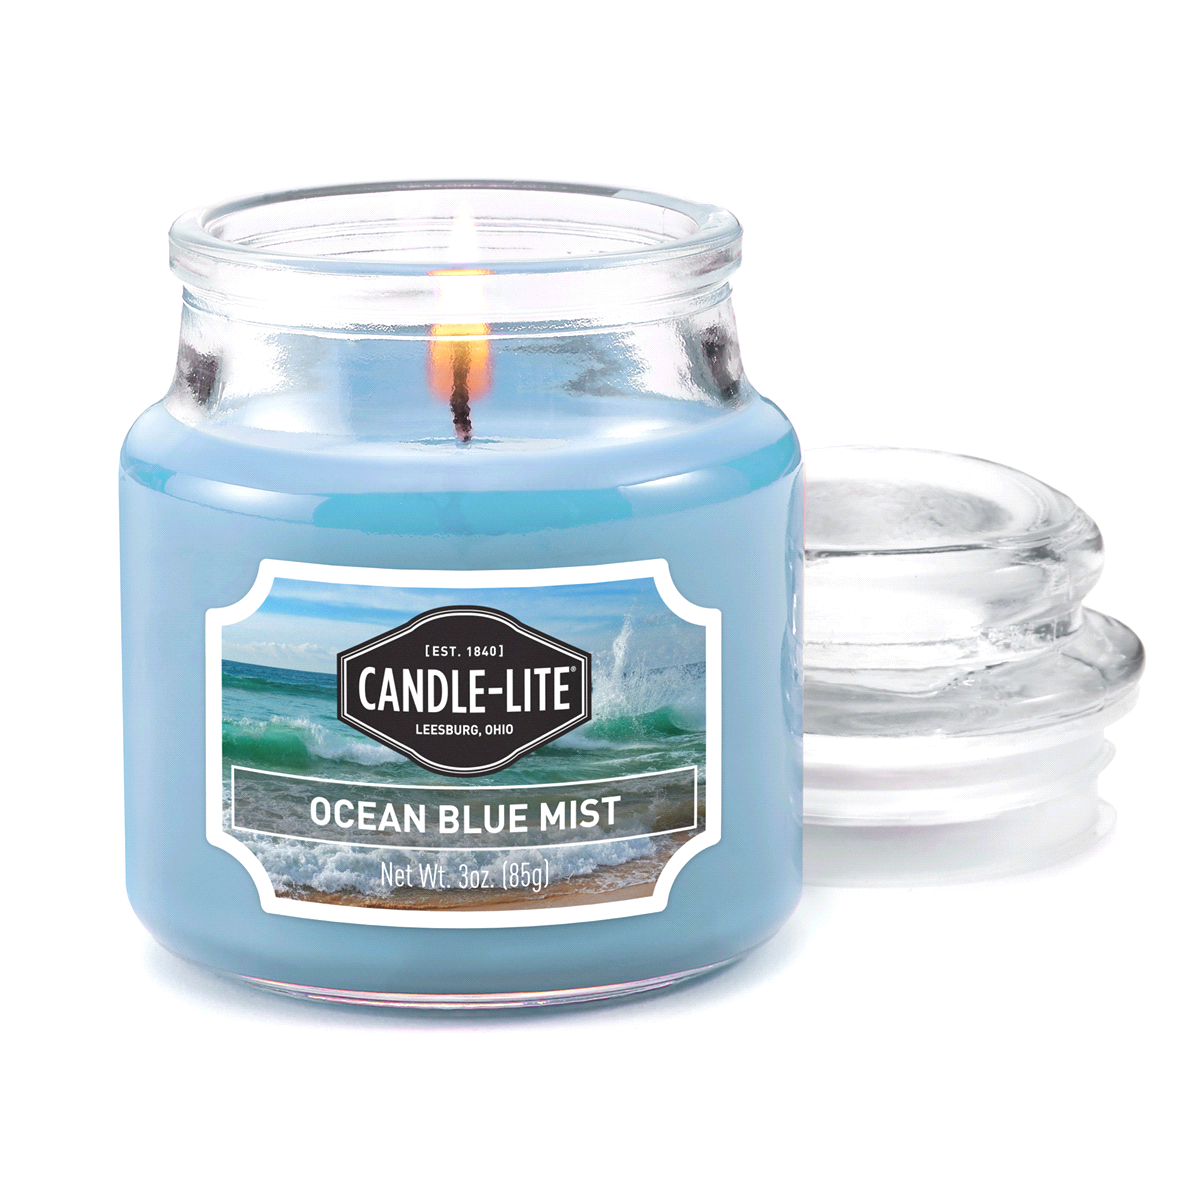 Candle-lite Ocean Blue Mist Jar Candle - ScentGiant